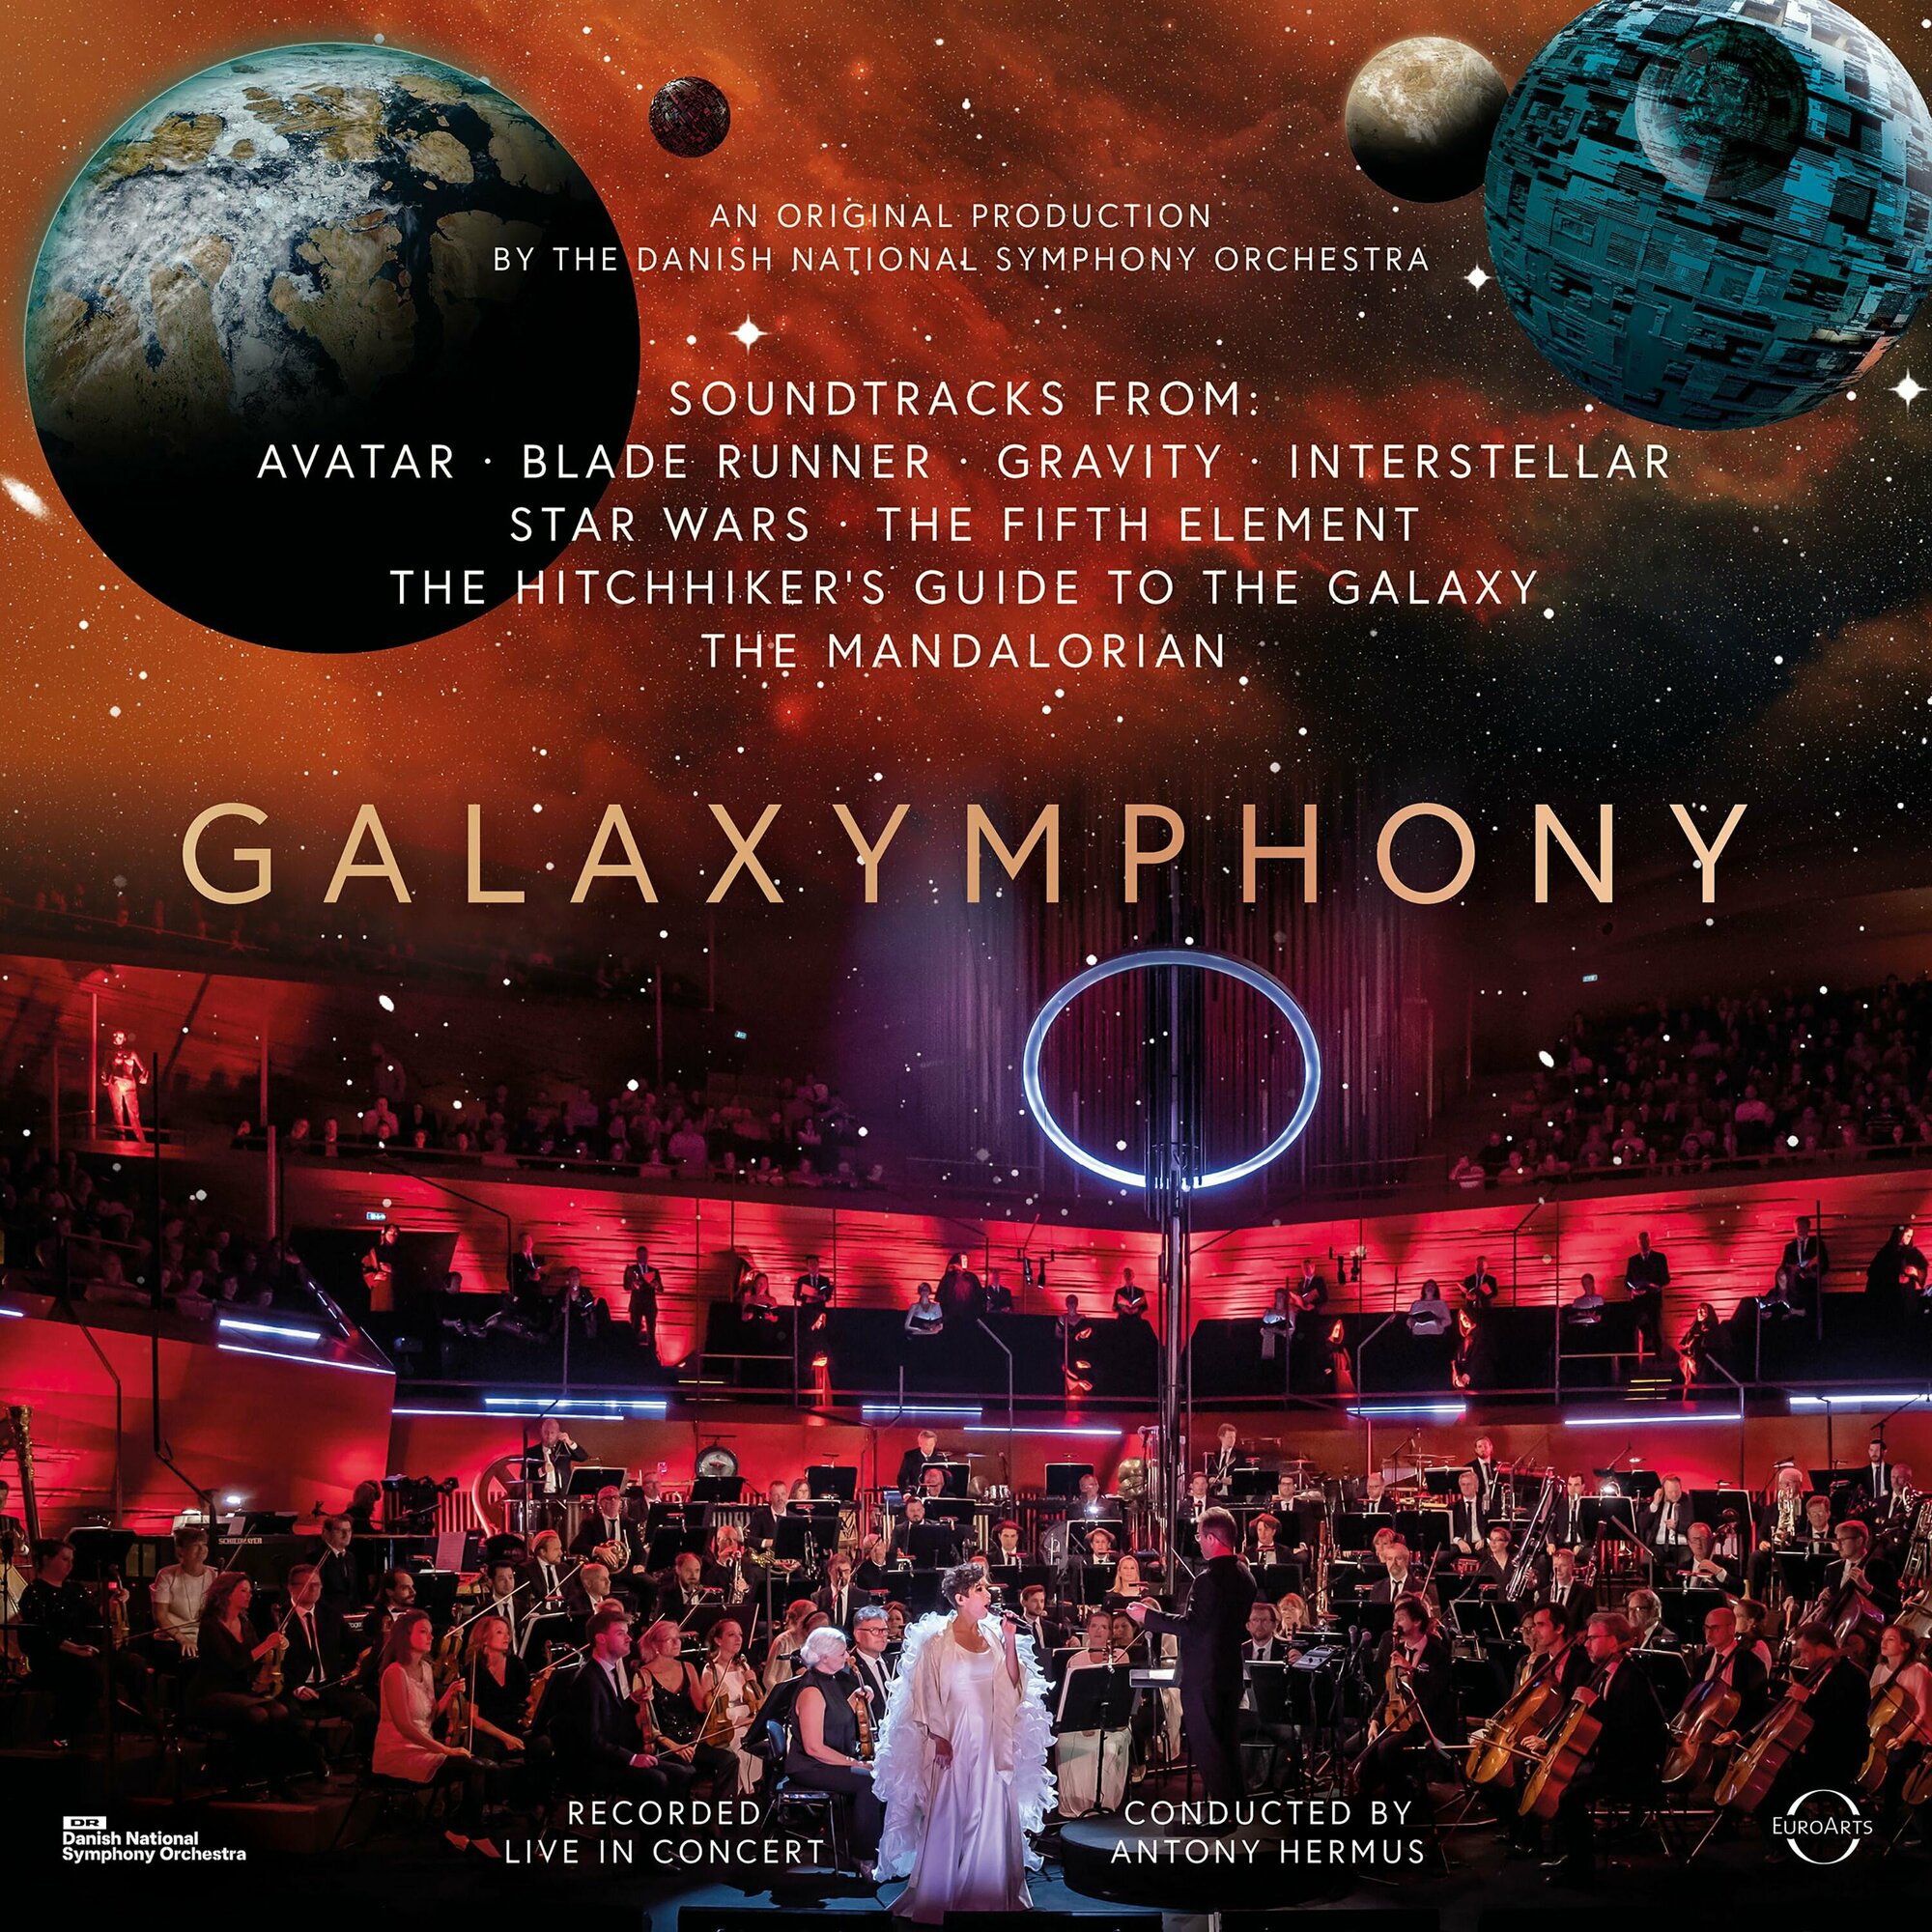 DR SymfoniOrkestret, Antony Hermus – Galaxymphony